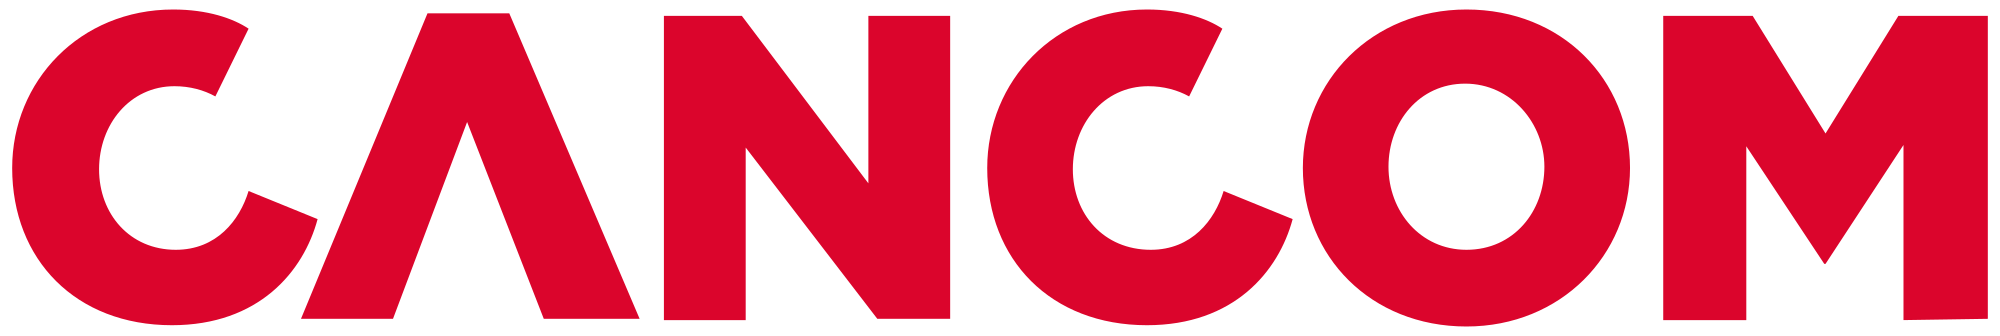 2000px-Cancom_logo.svg